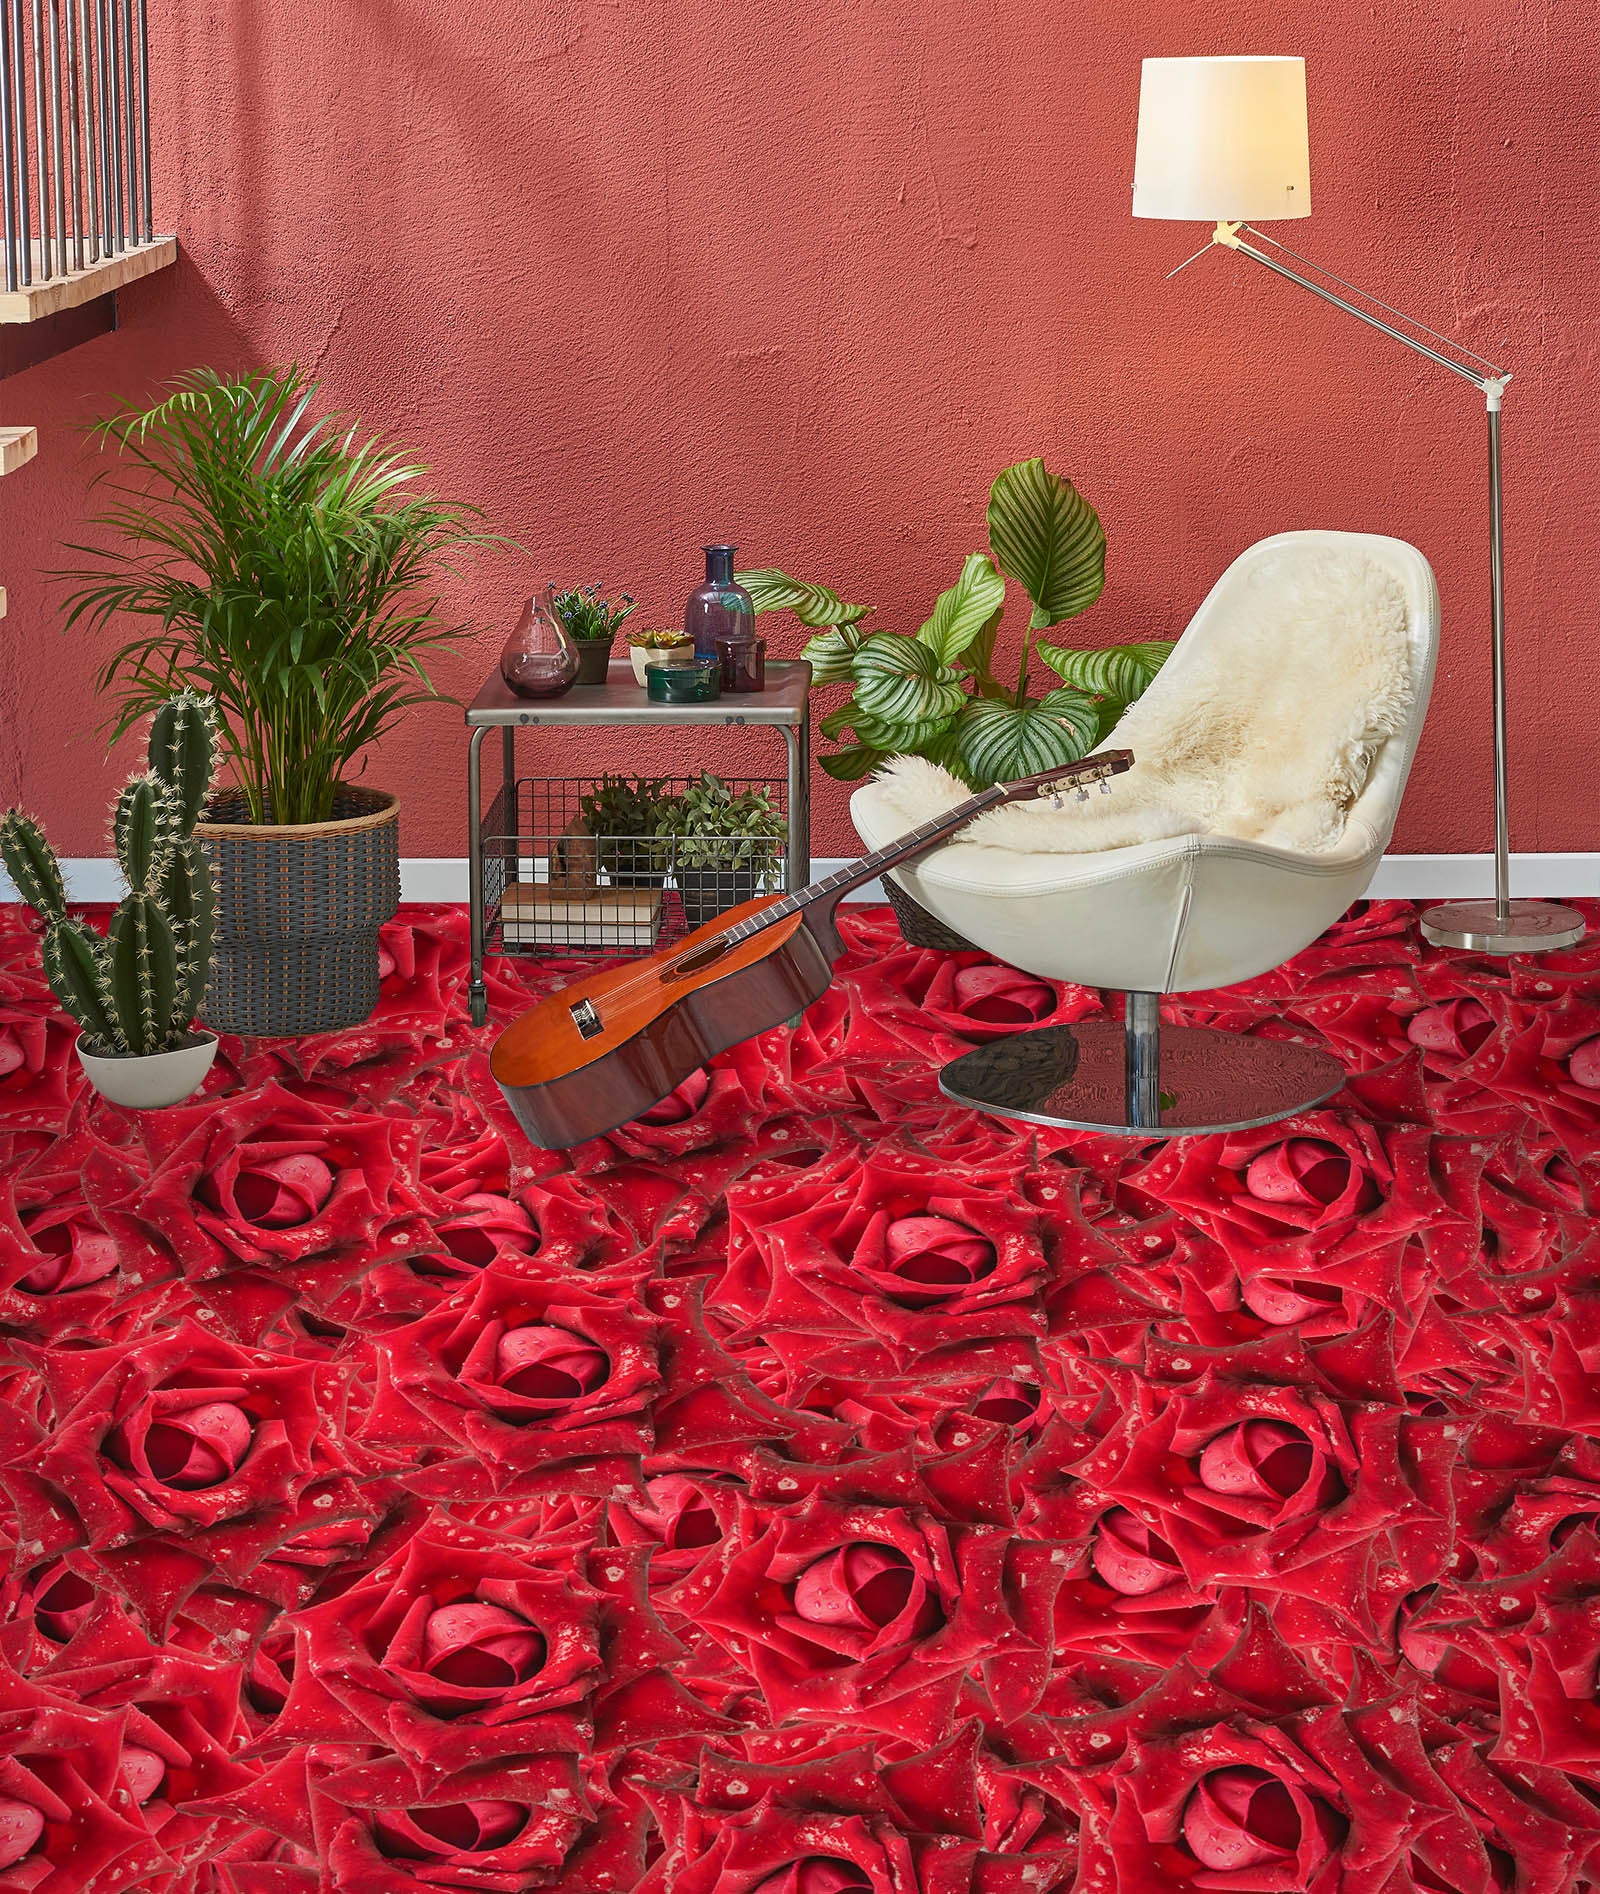 3D Fantasy Red Roses 323 Floor Mural  Wallpaper Murals Rug & Mat Print Epoxy waterproof bath floor